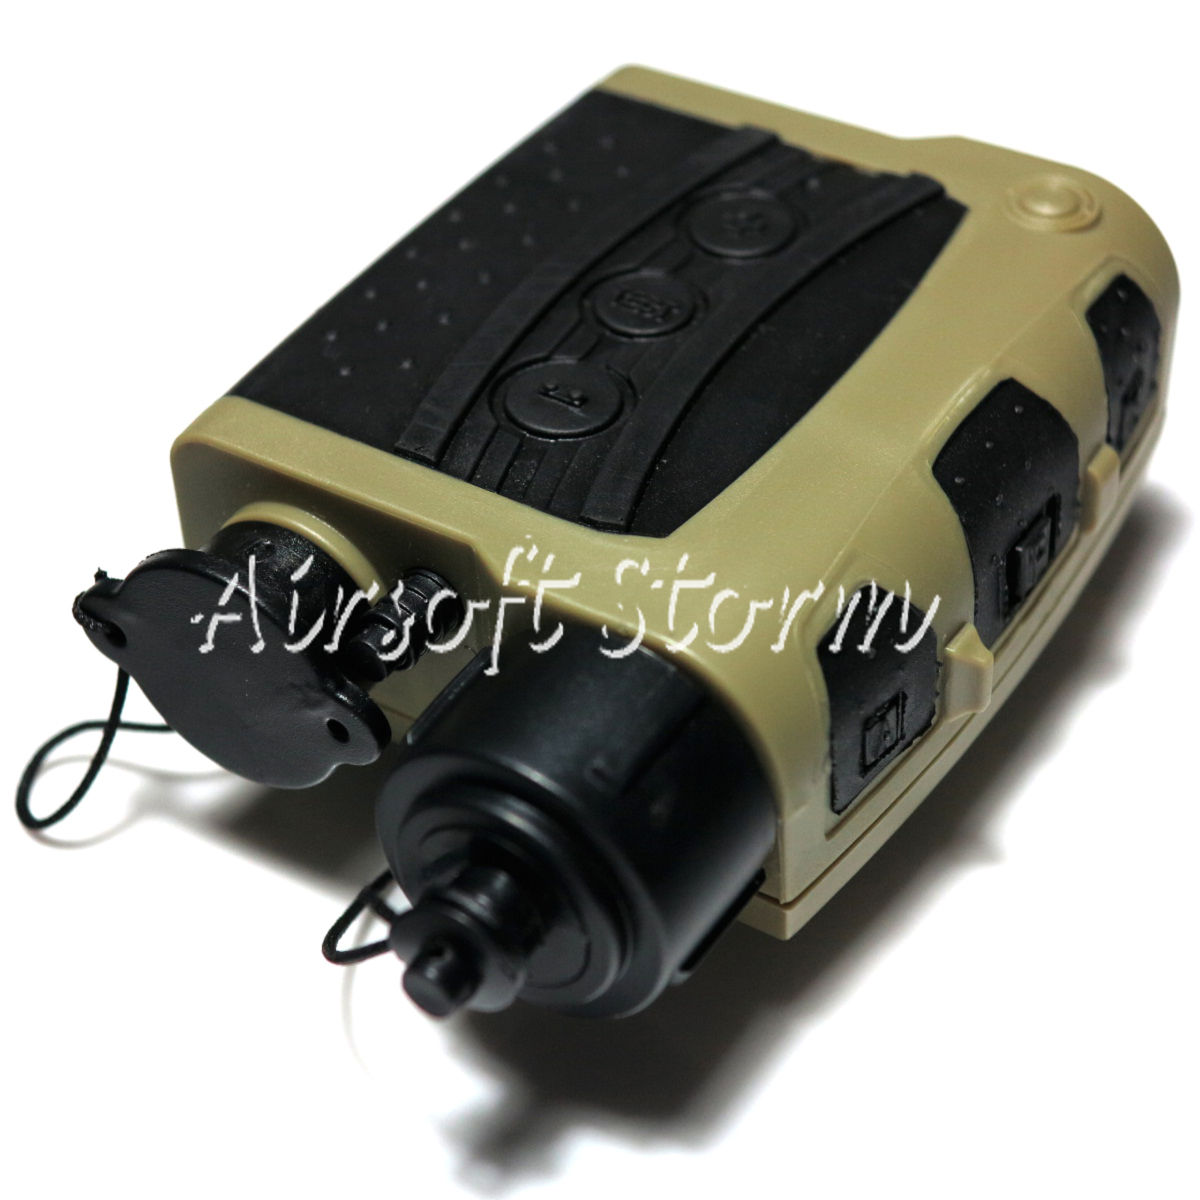 Airsoft SWAT Communications Gear Z Tactical ZQUIET PRO PTT & Wire for Yaesu Radio